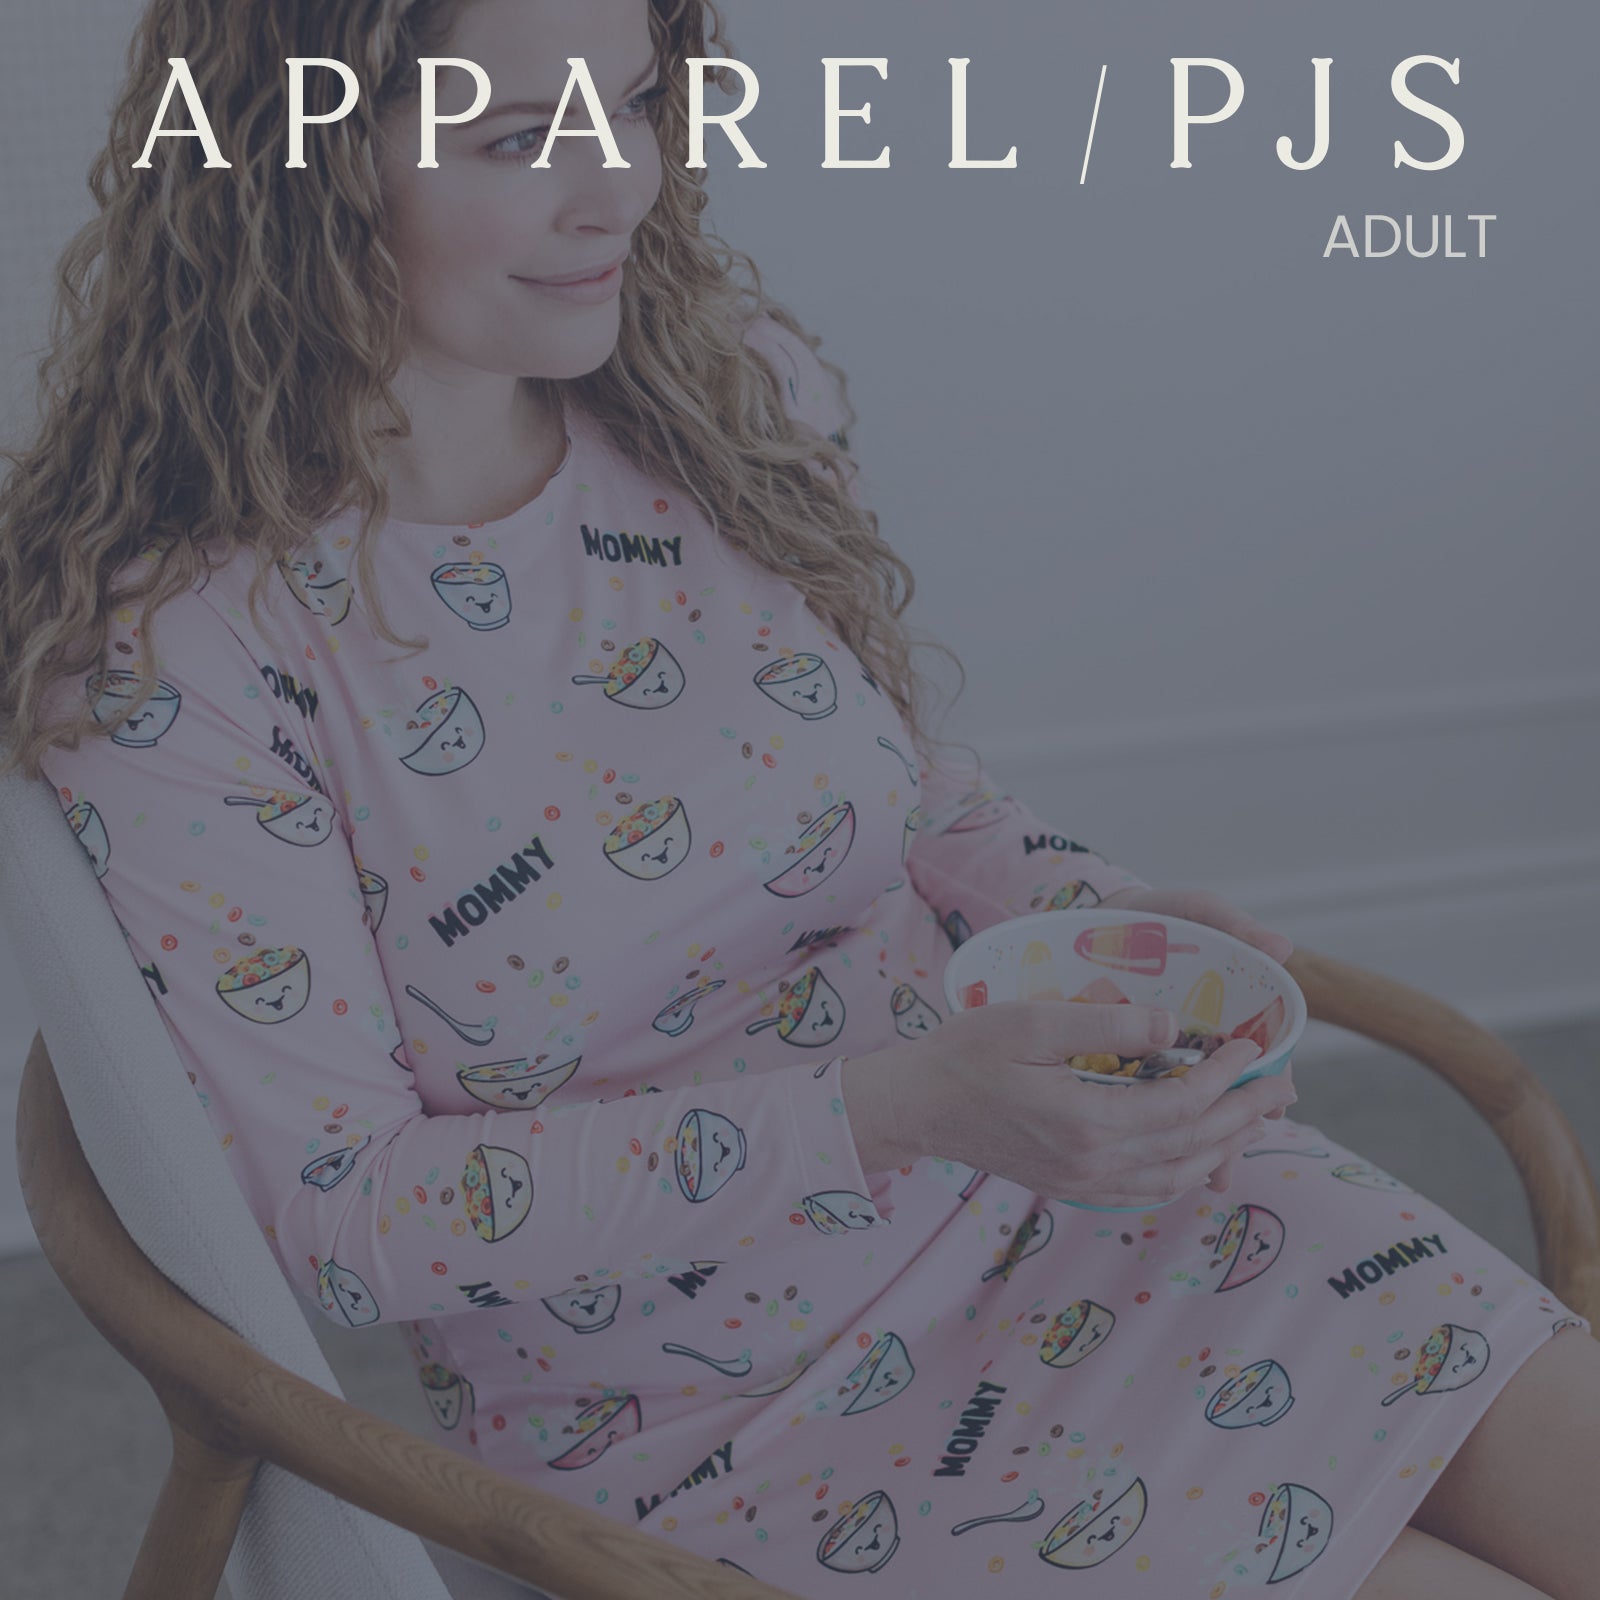 Adult - Apparel/Sleepwear